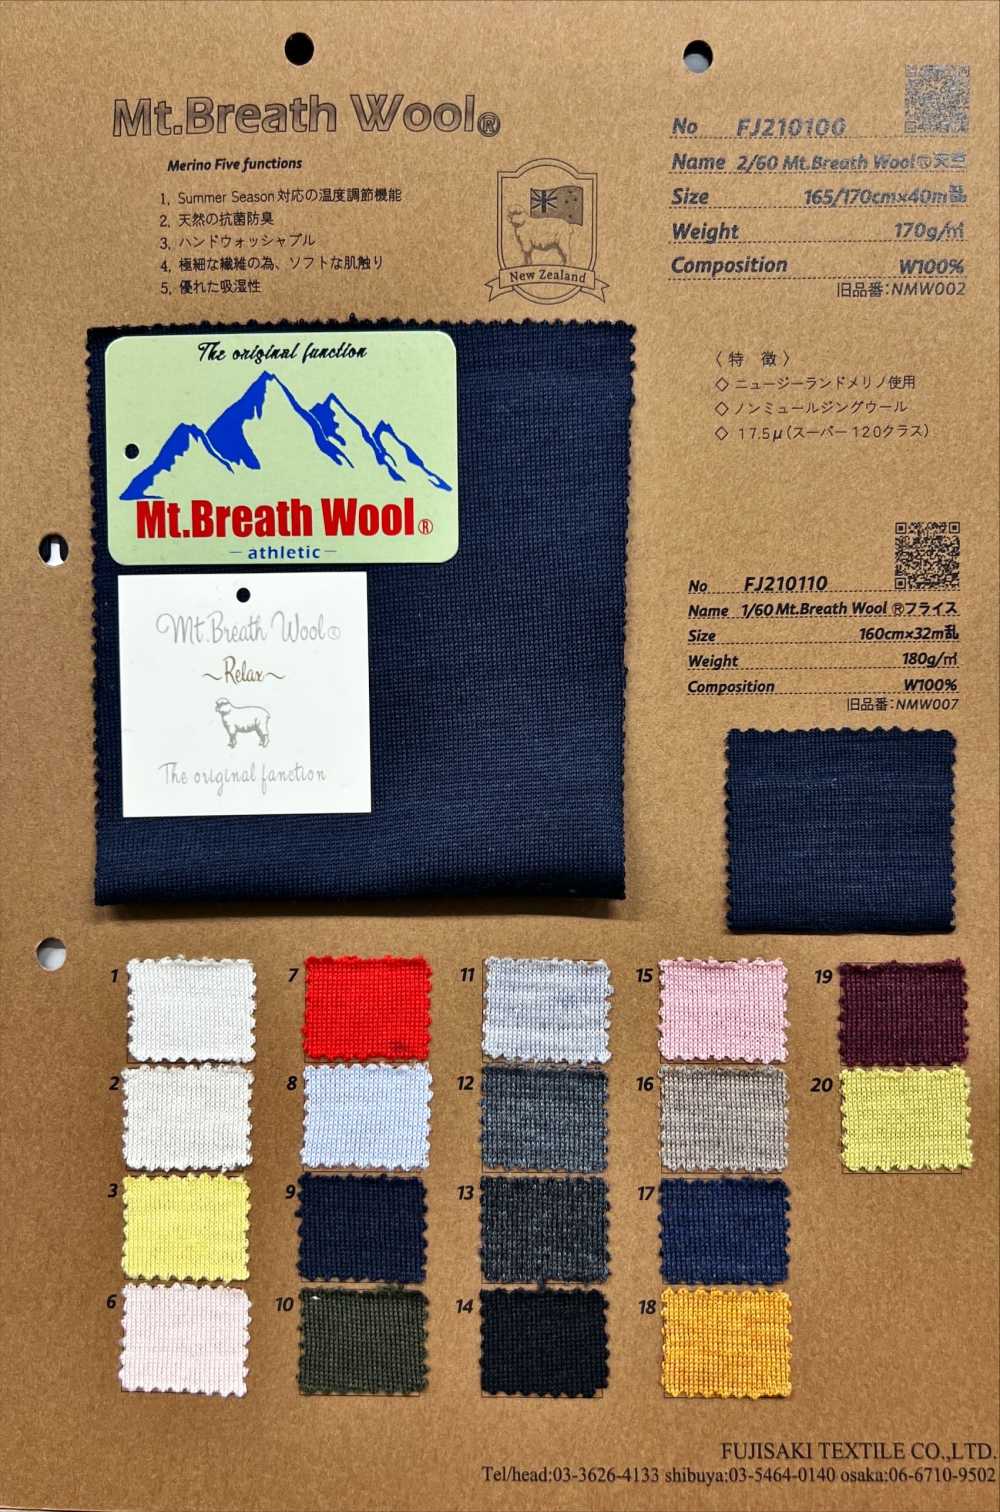 FJ210100 Jersey De Laine 2/60 Mt.Breath[Fabrication De Textile] Fujisaki Textile